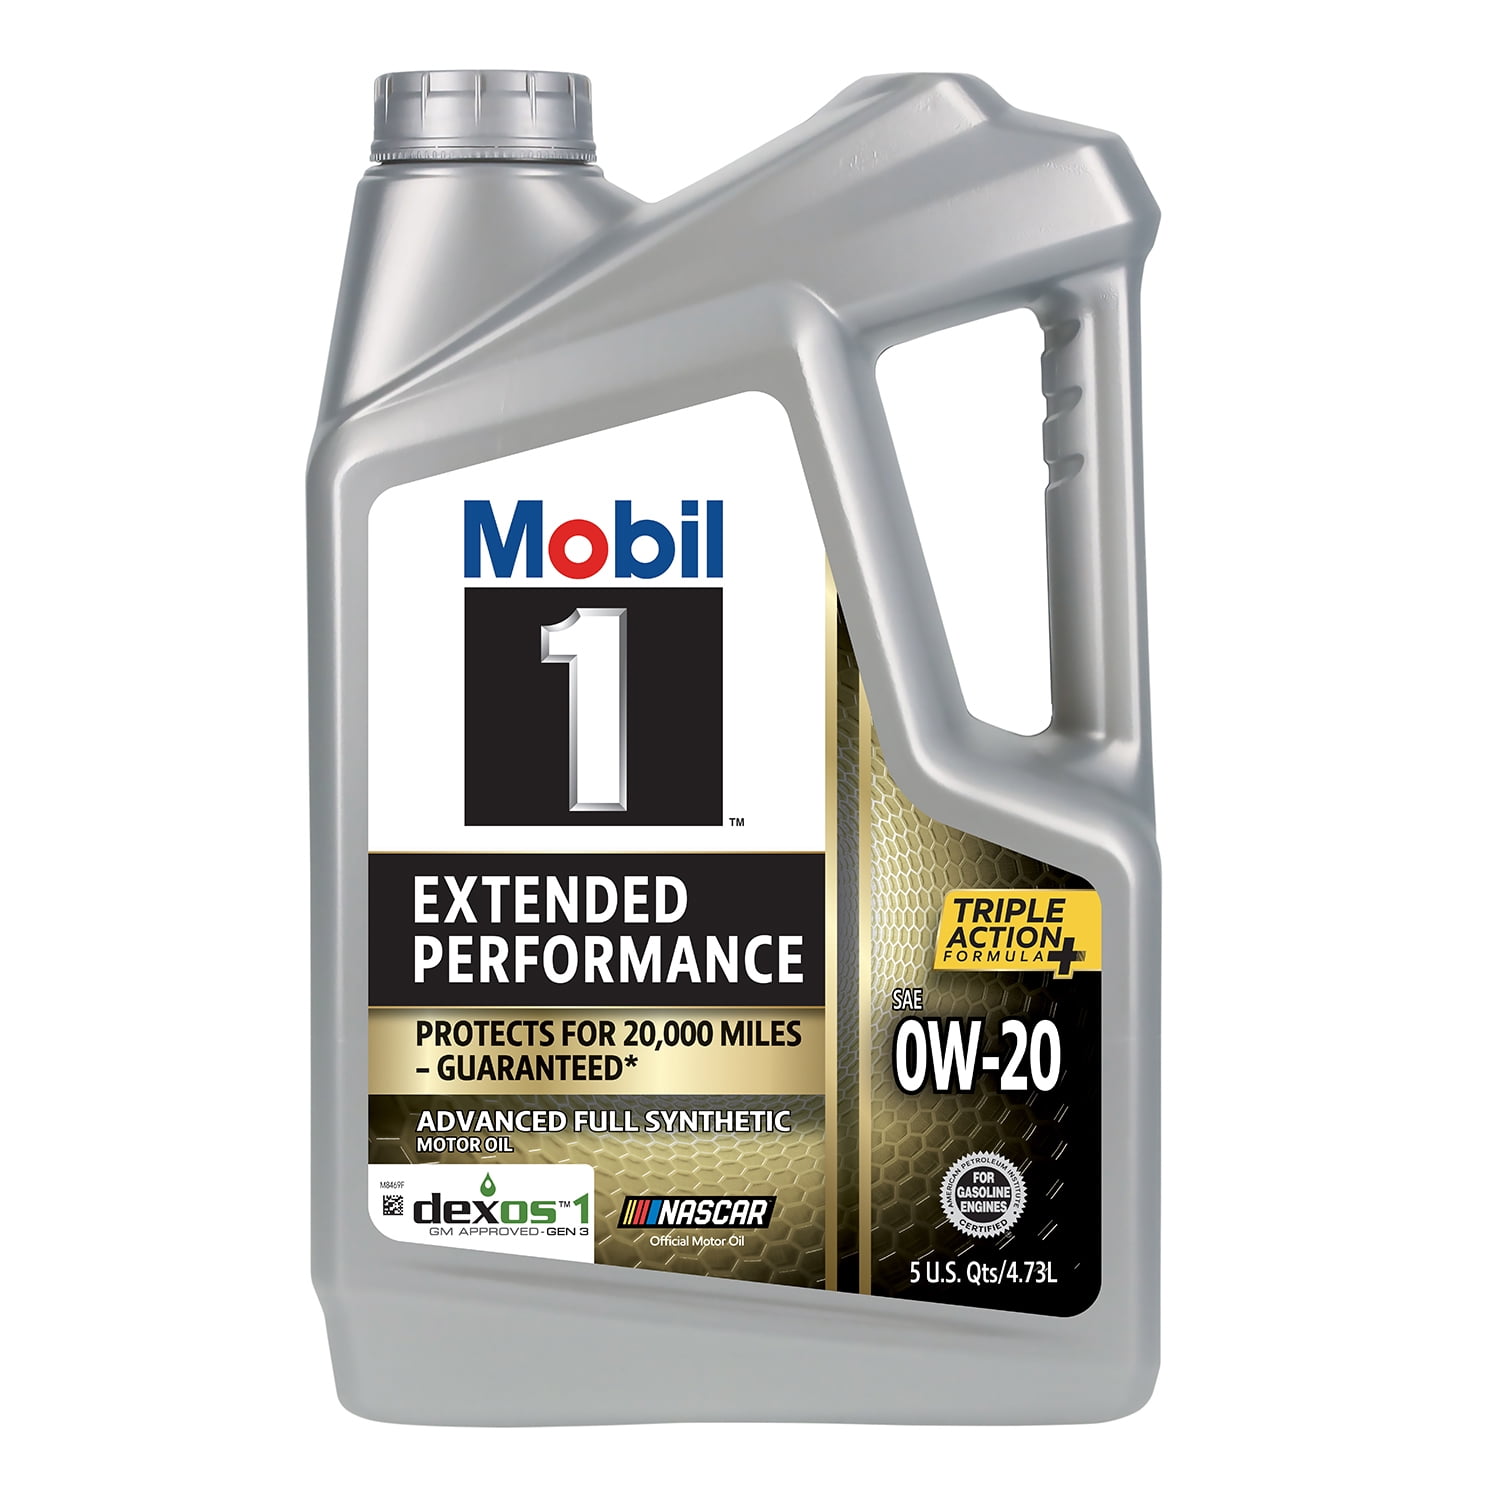 Mobil 1 Extended Performance Full Synthetic Motor Oil 0W-20, 5 qt (3 Pack) - 2